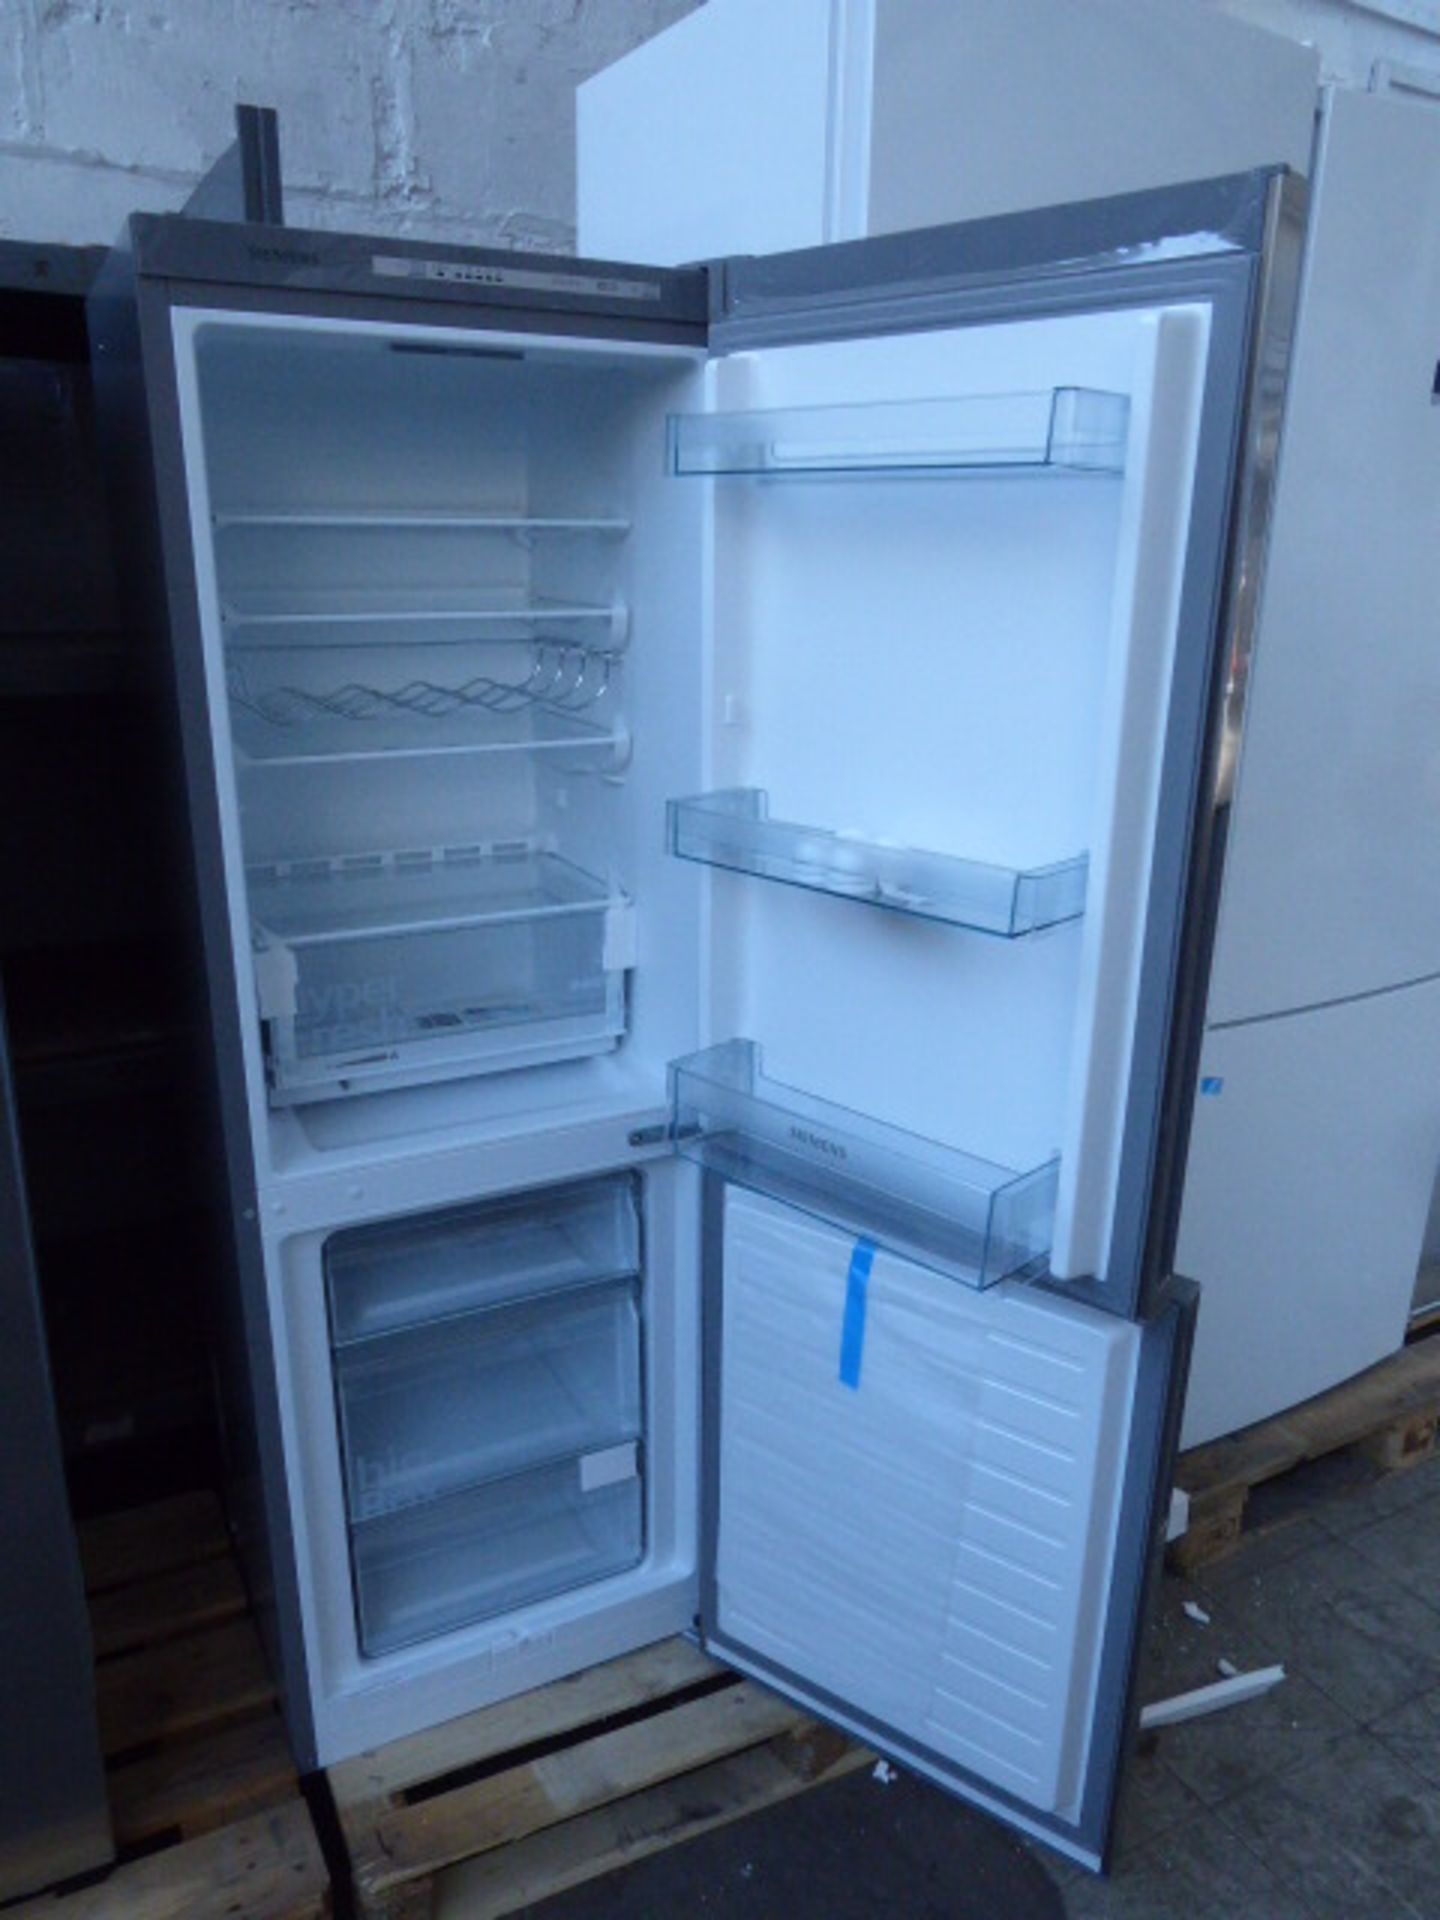 KG33VVIEAGB Siemens Free-standing fridge-freezer - Image 4 of 4